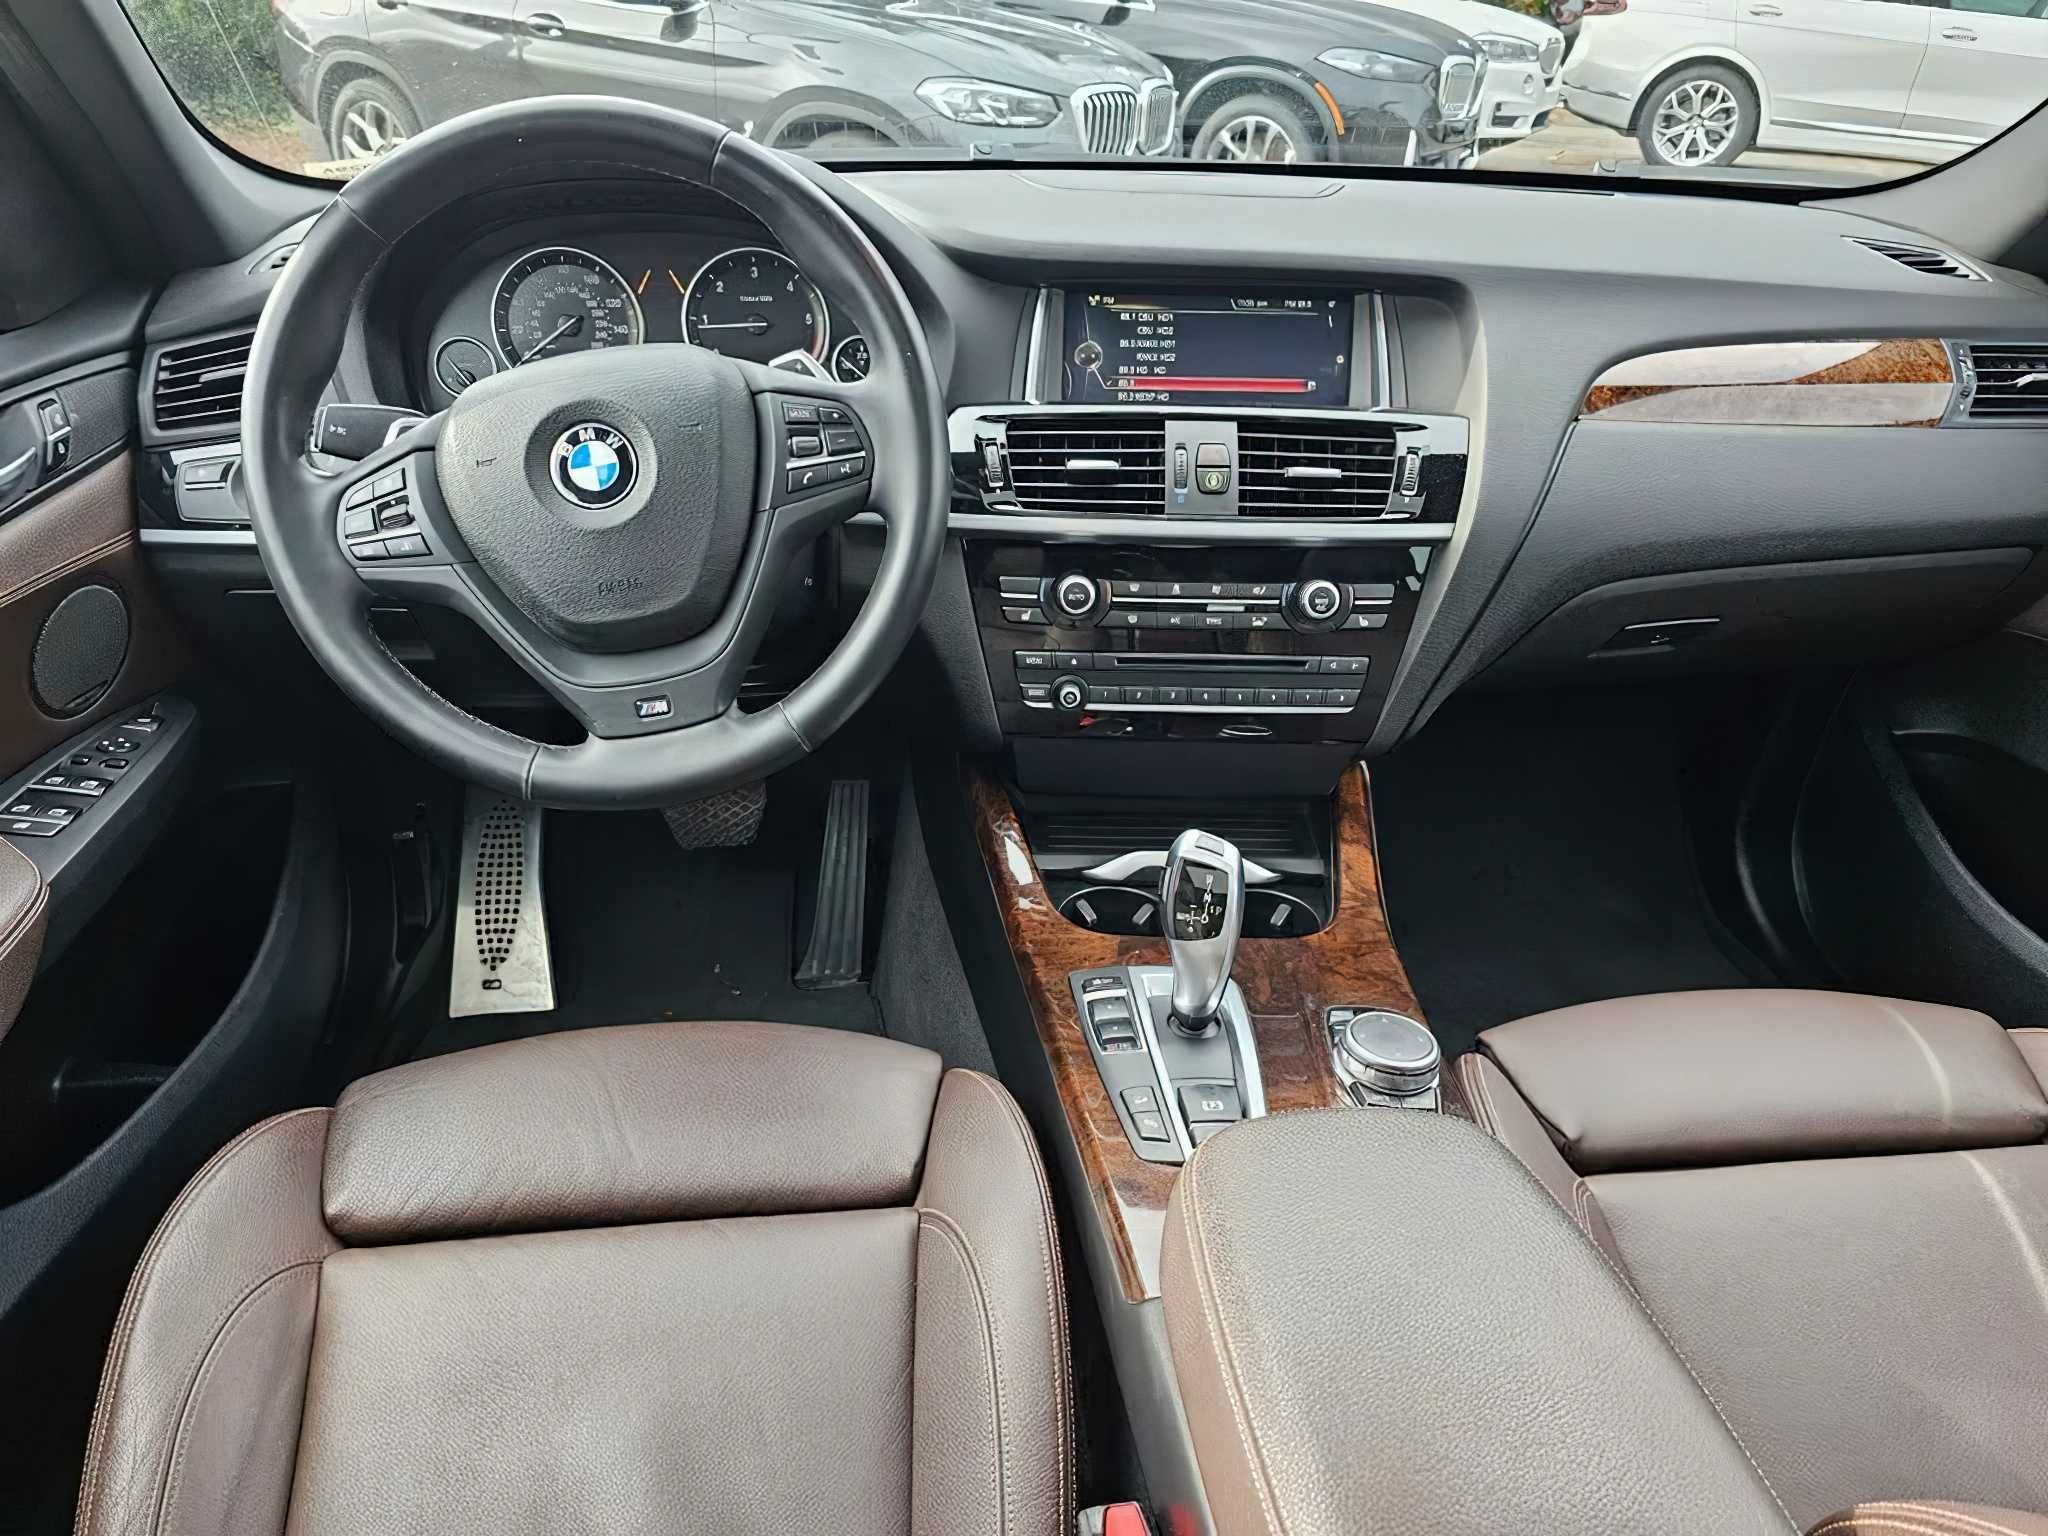 BMW X3 2015 Black